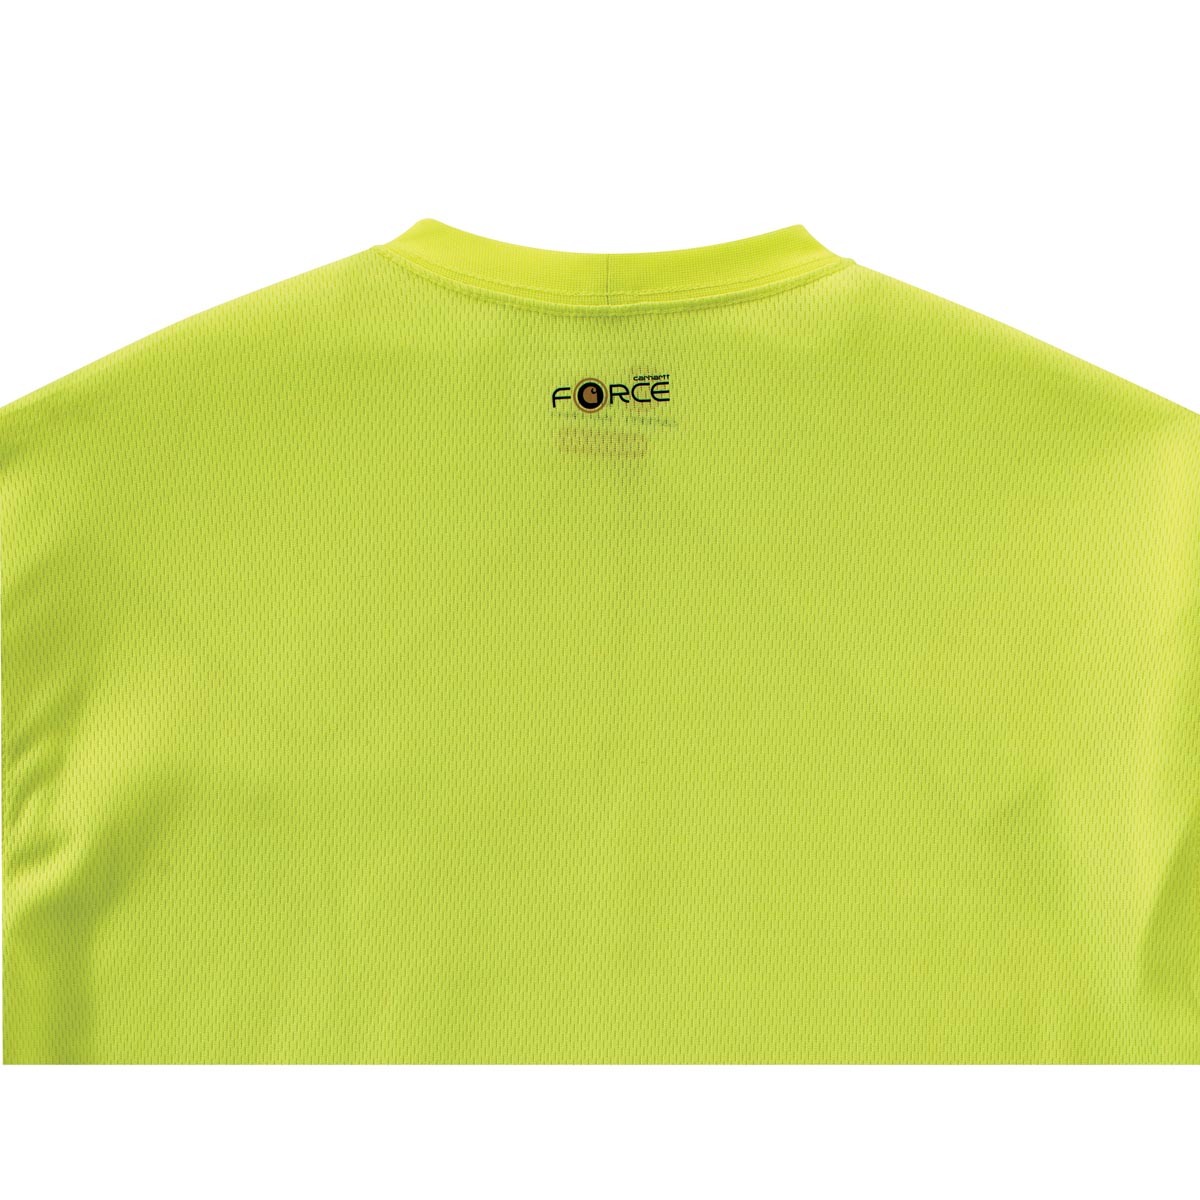 Carhartt Men's HV Force Color Enhanced Graphic Long Sleeve T Shirt